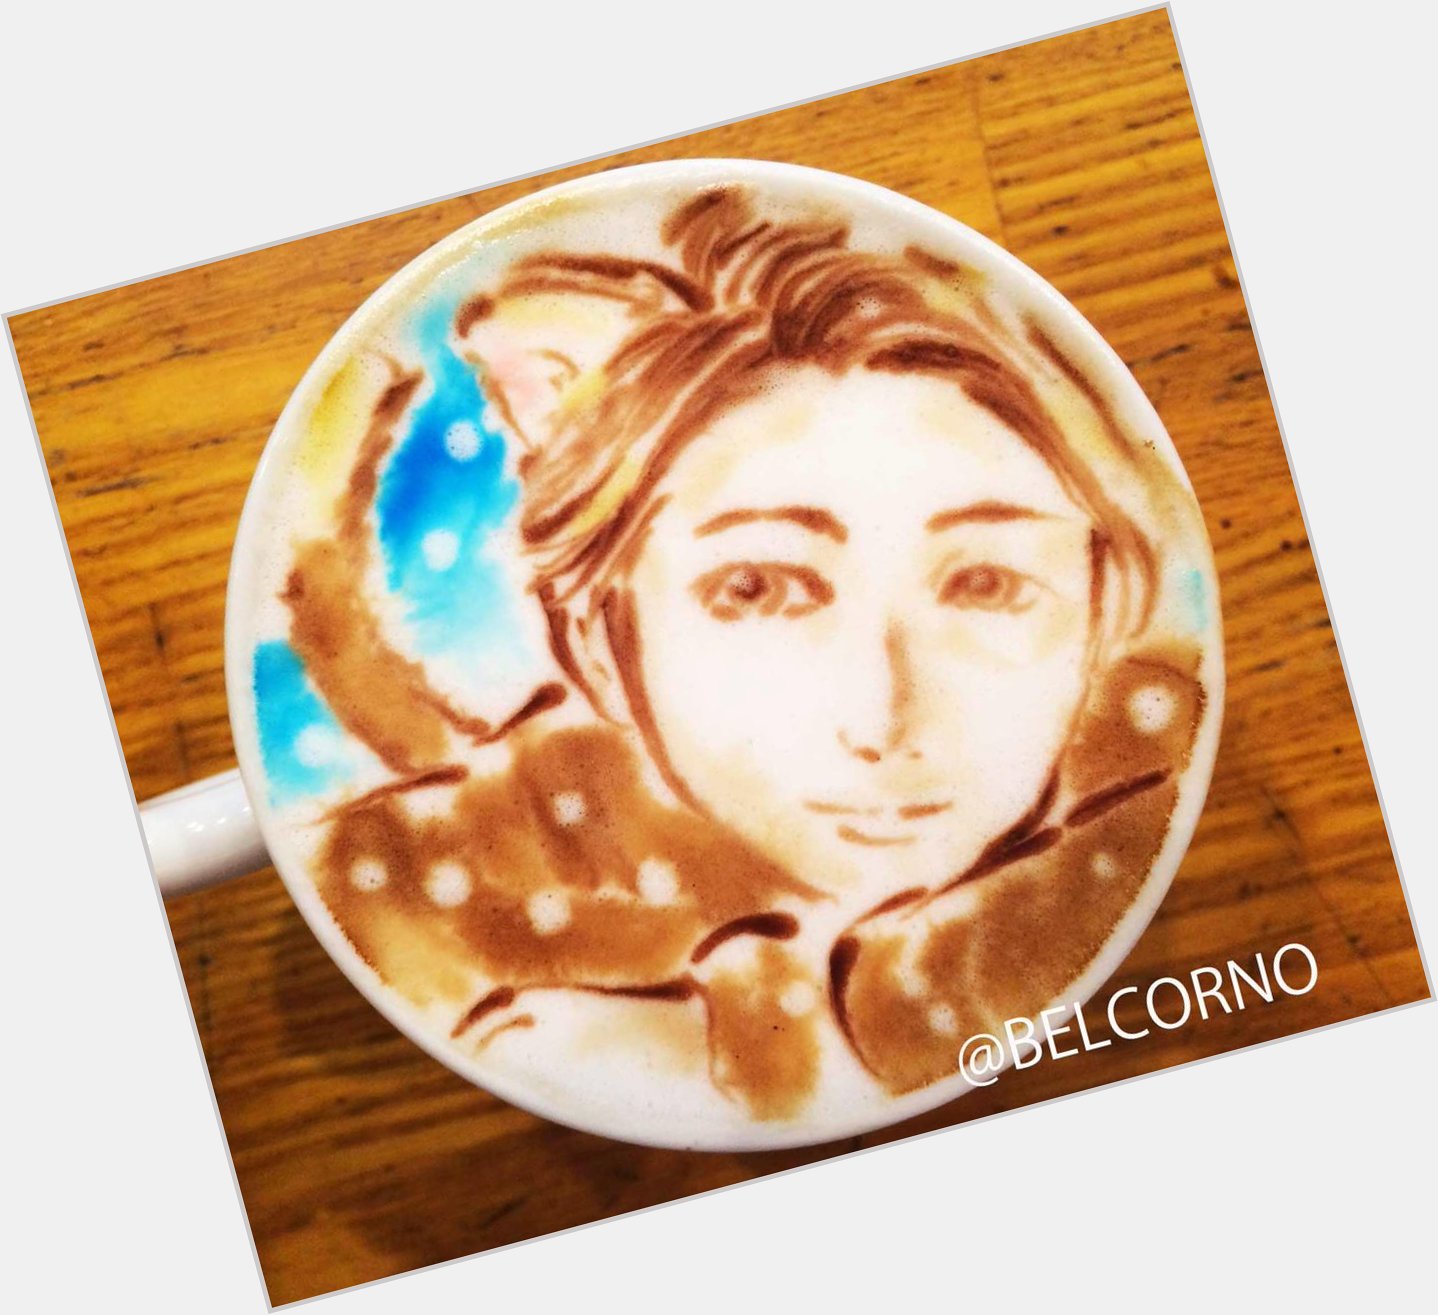              LatteArt Satoshi Ohno           Happy Birthday!   